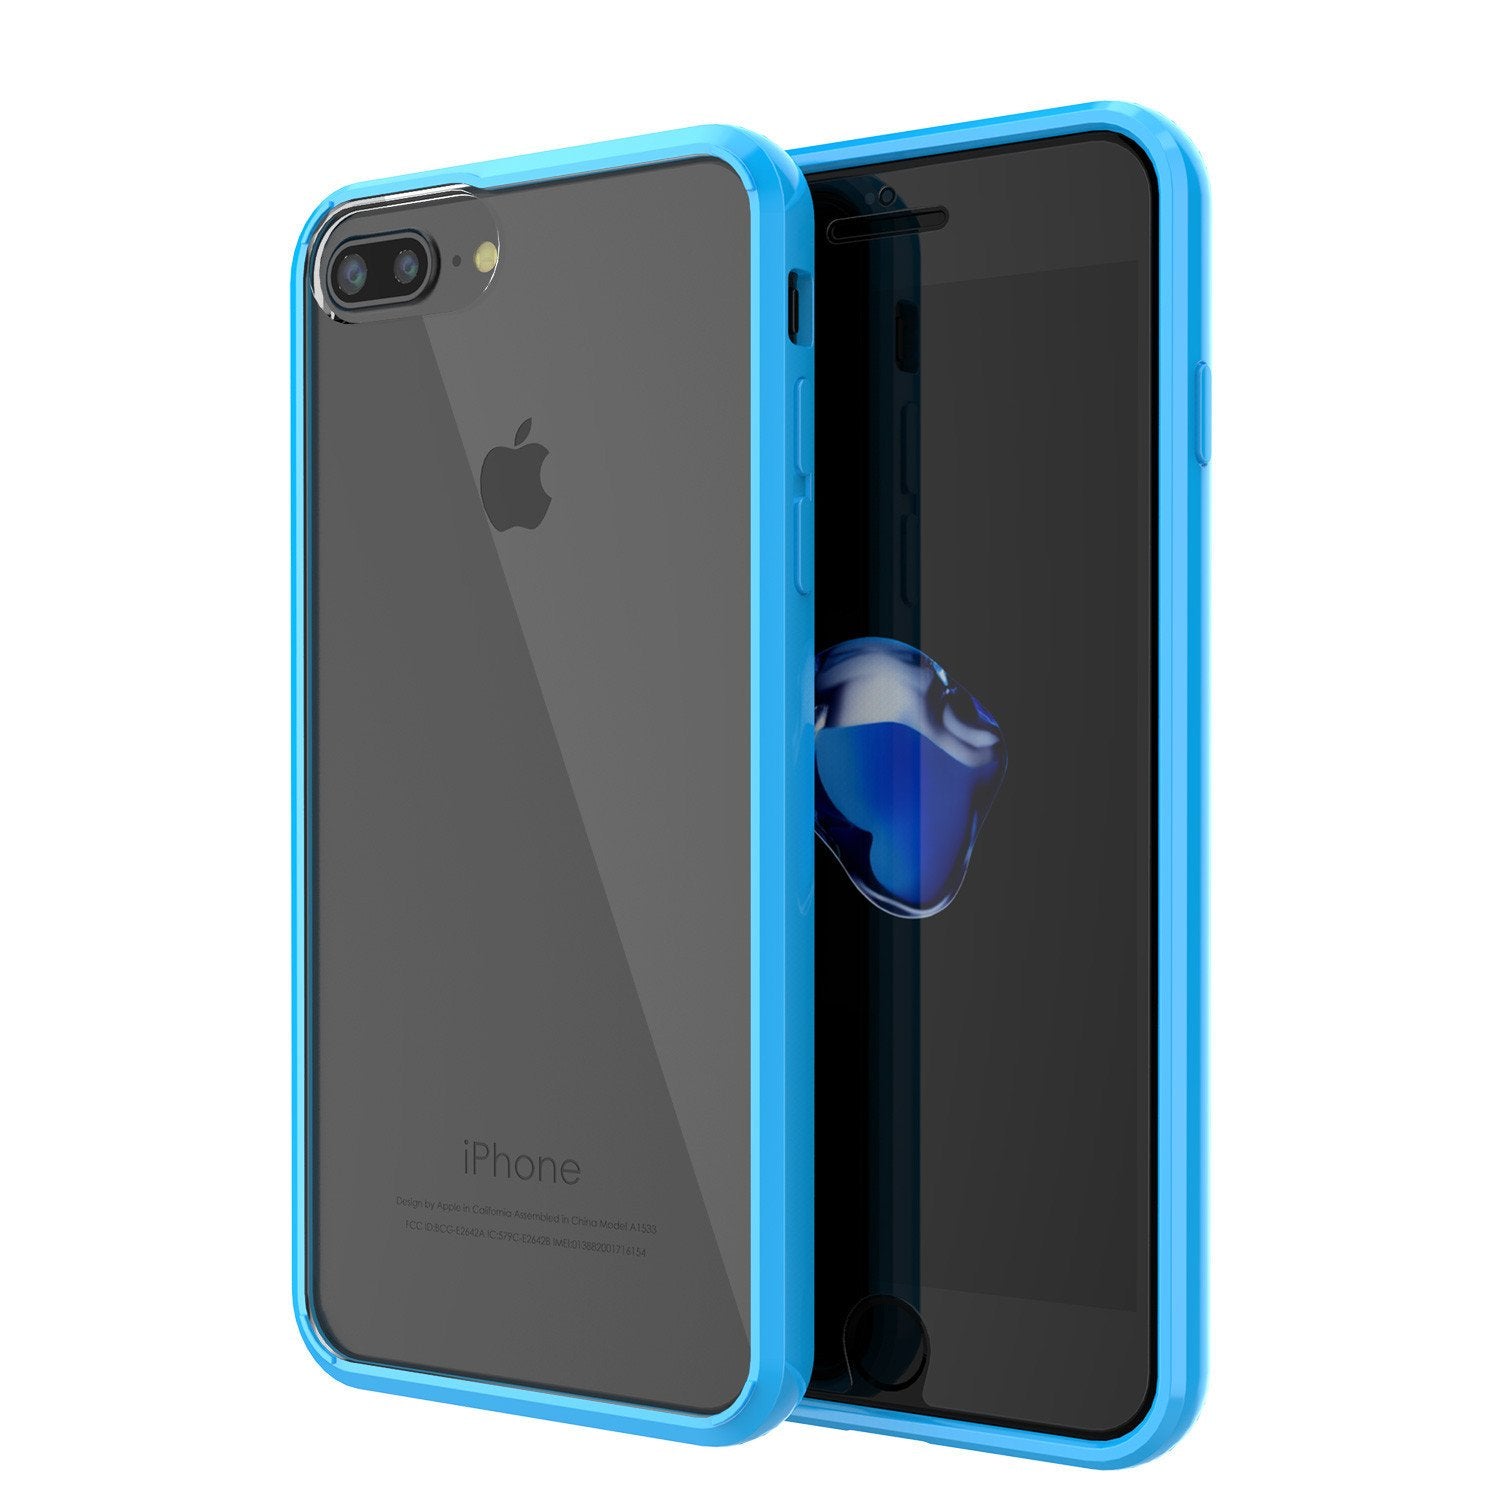 iPhone 7 Case Punkcase® LUCID 2.0 Light Blue Series for Apple iPhone 7 Slim | Slick Frame Lifetime Warranty Exchange